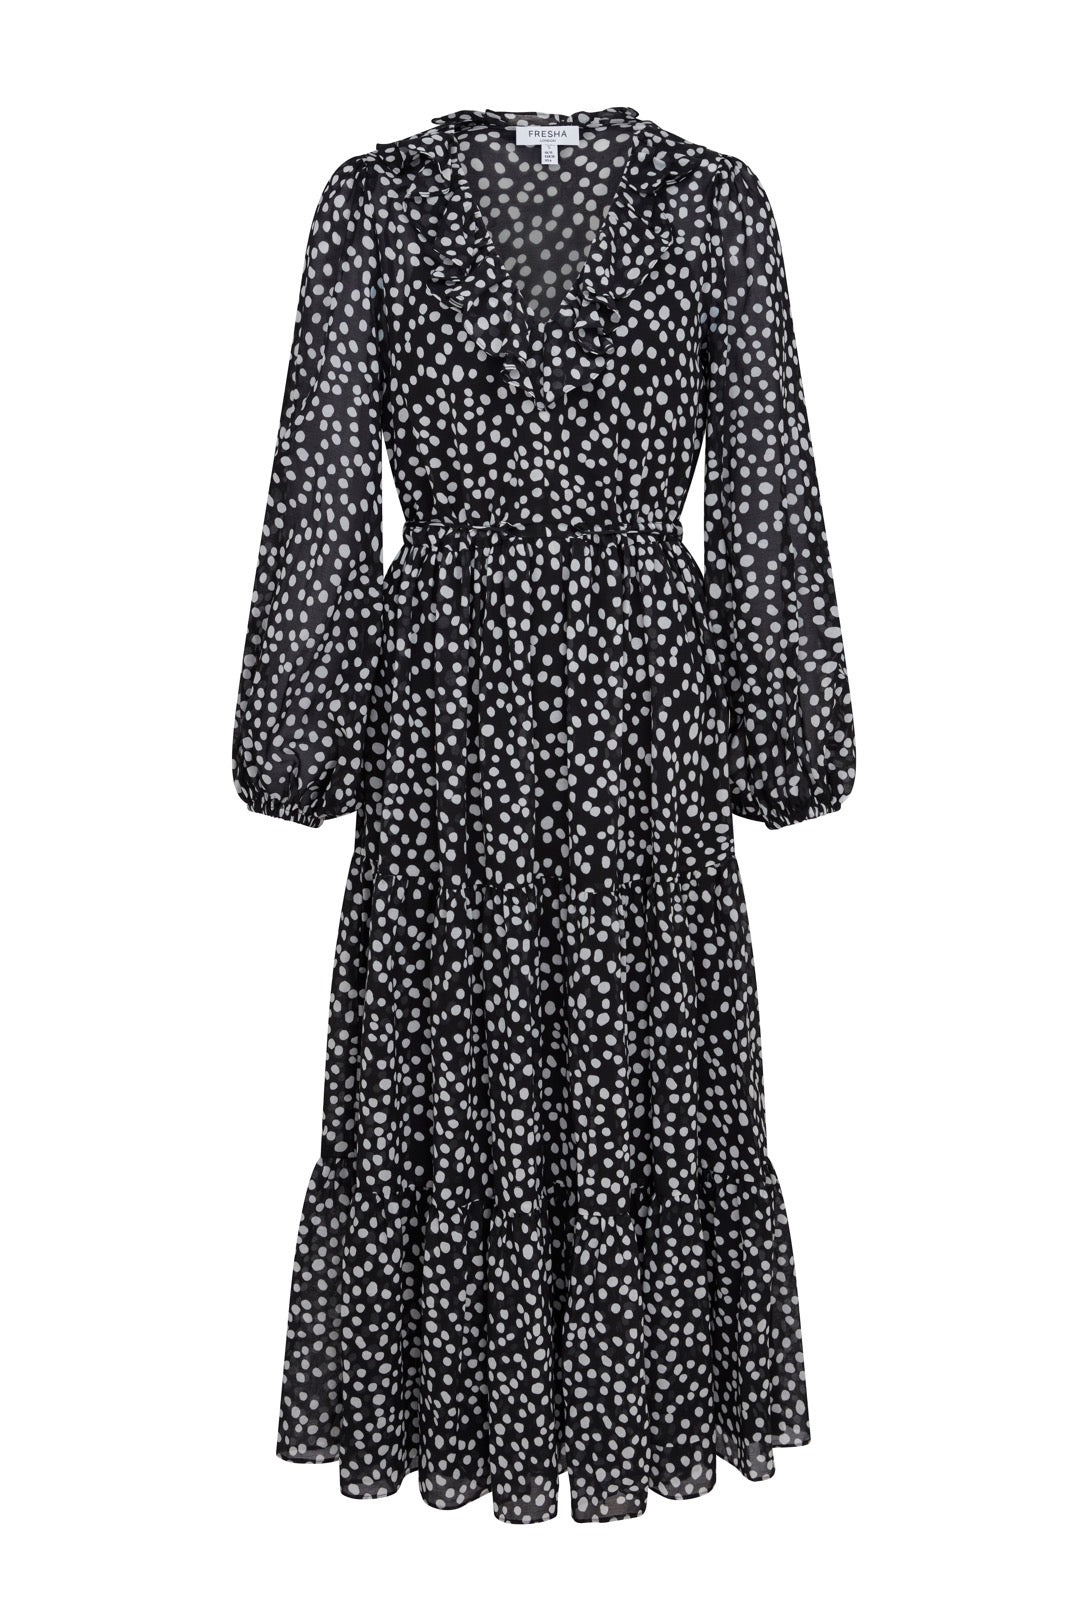 Fresha London Women's Ivy Dress Polka Dot In Black